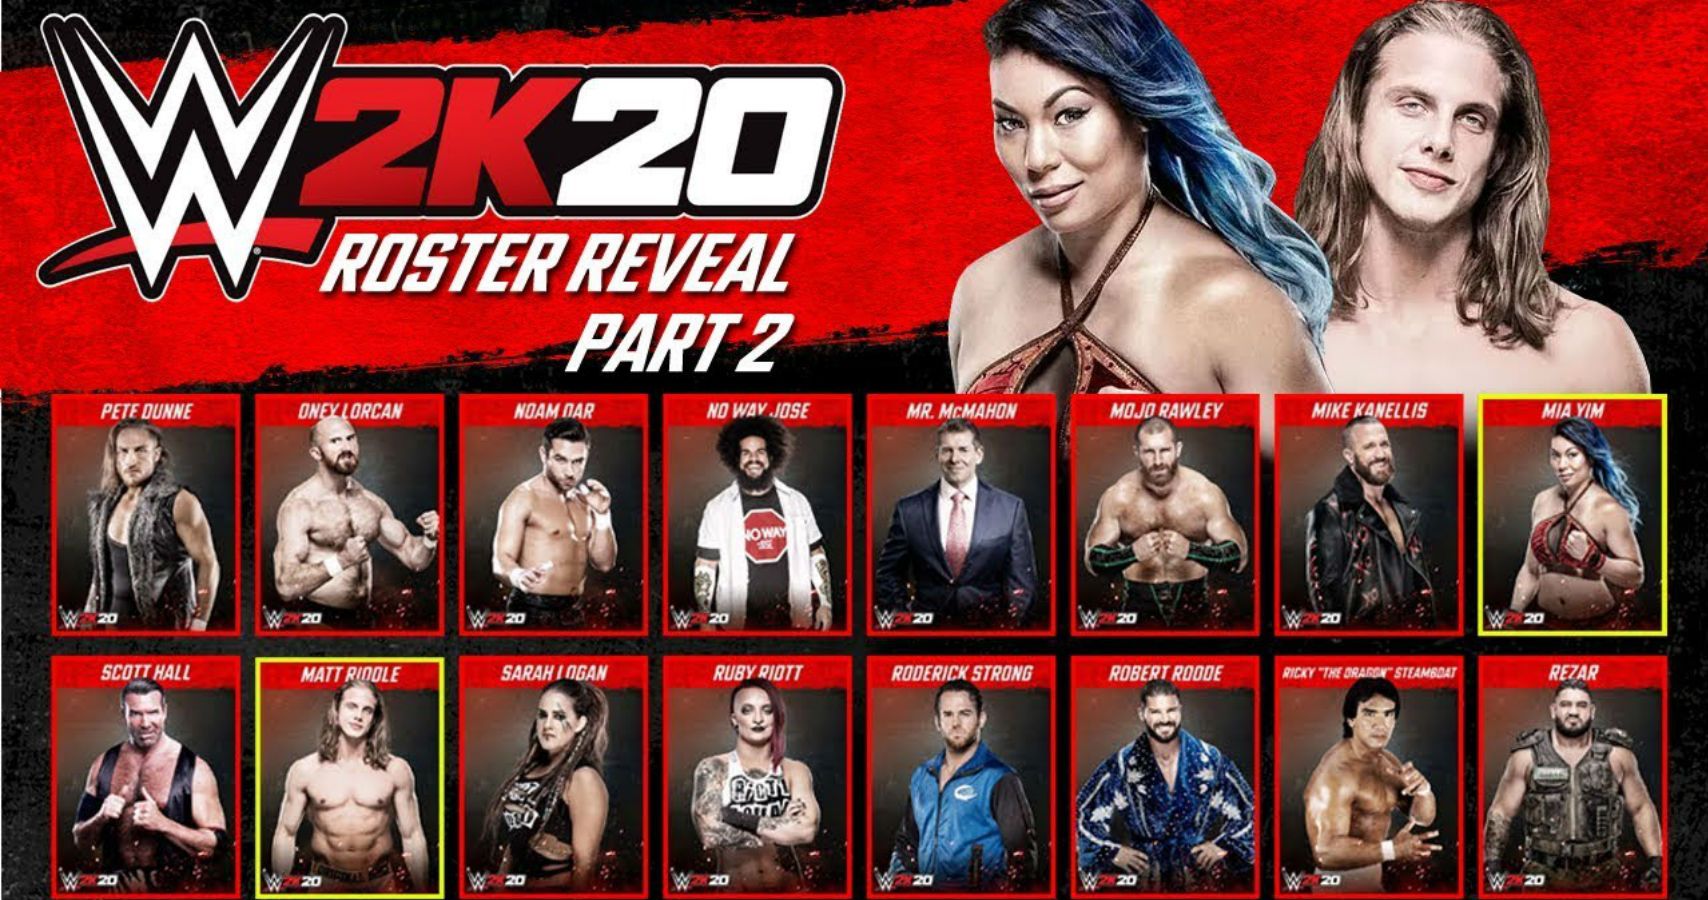 WWE 2K20: Confirmed Roster